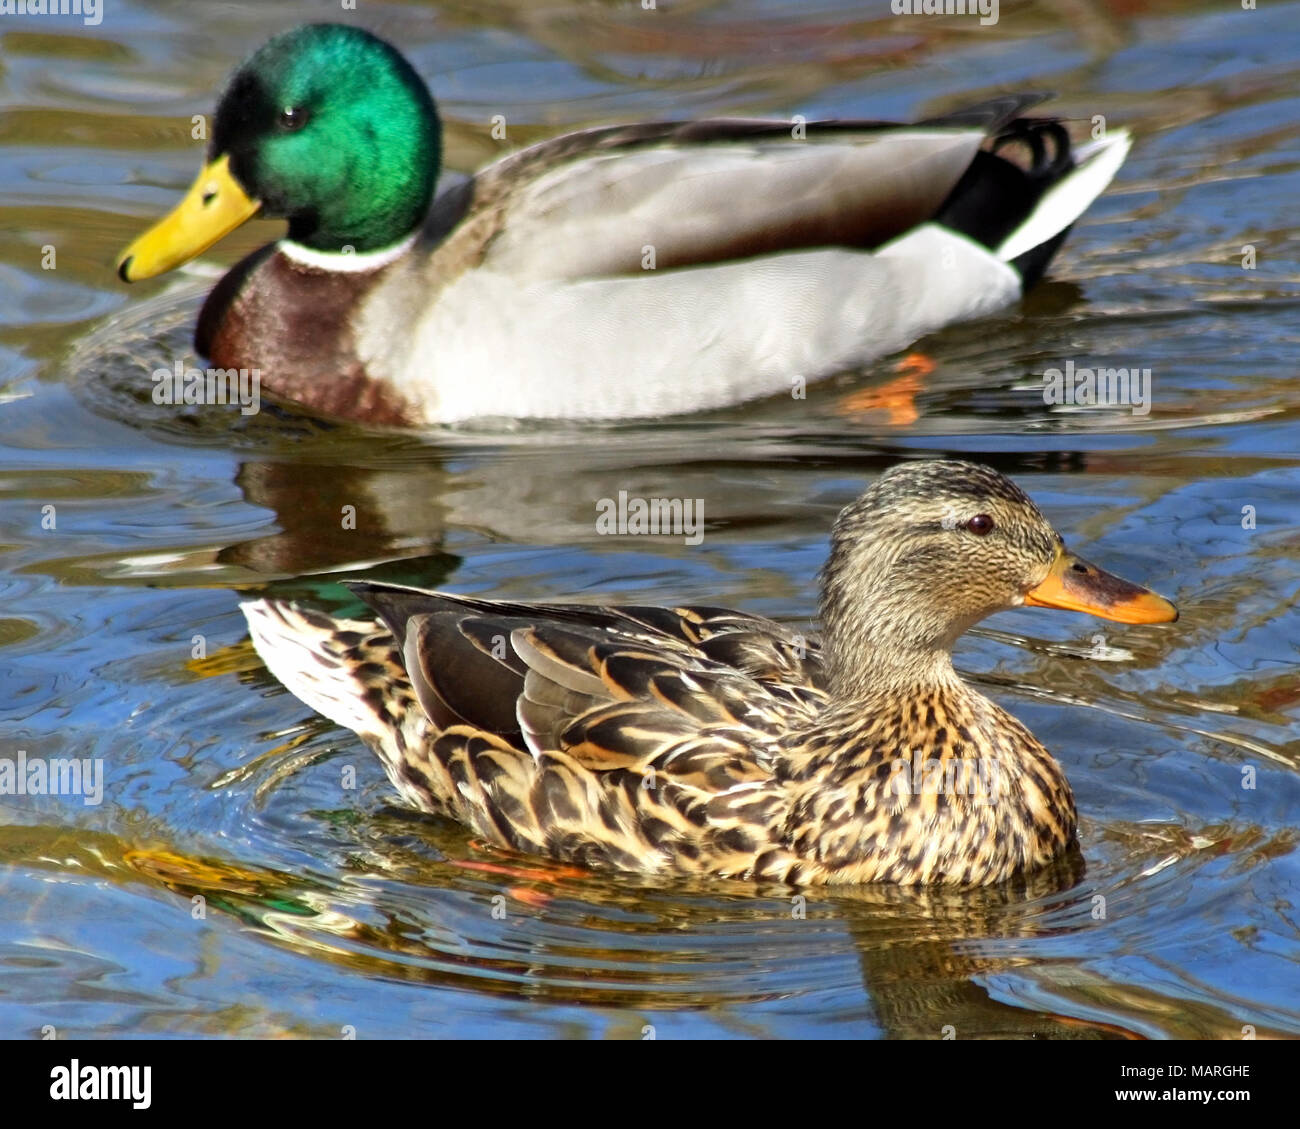 Mallard duck mates swimming together on beautiful blue waters Stock Photo